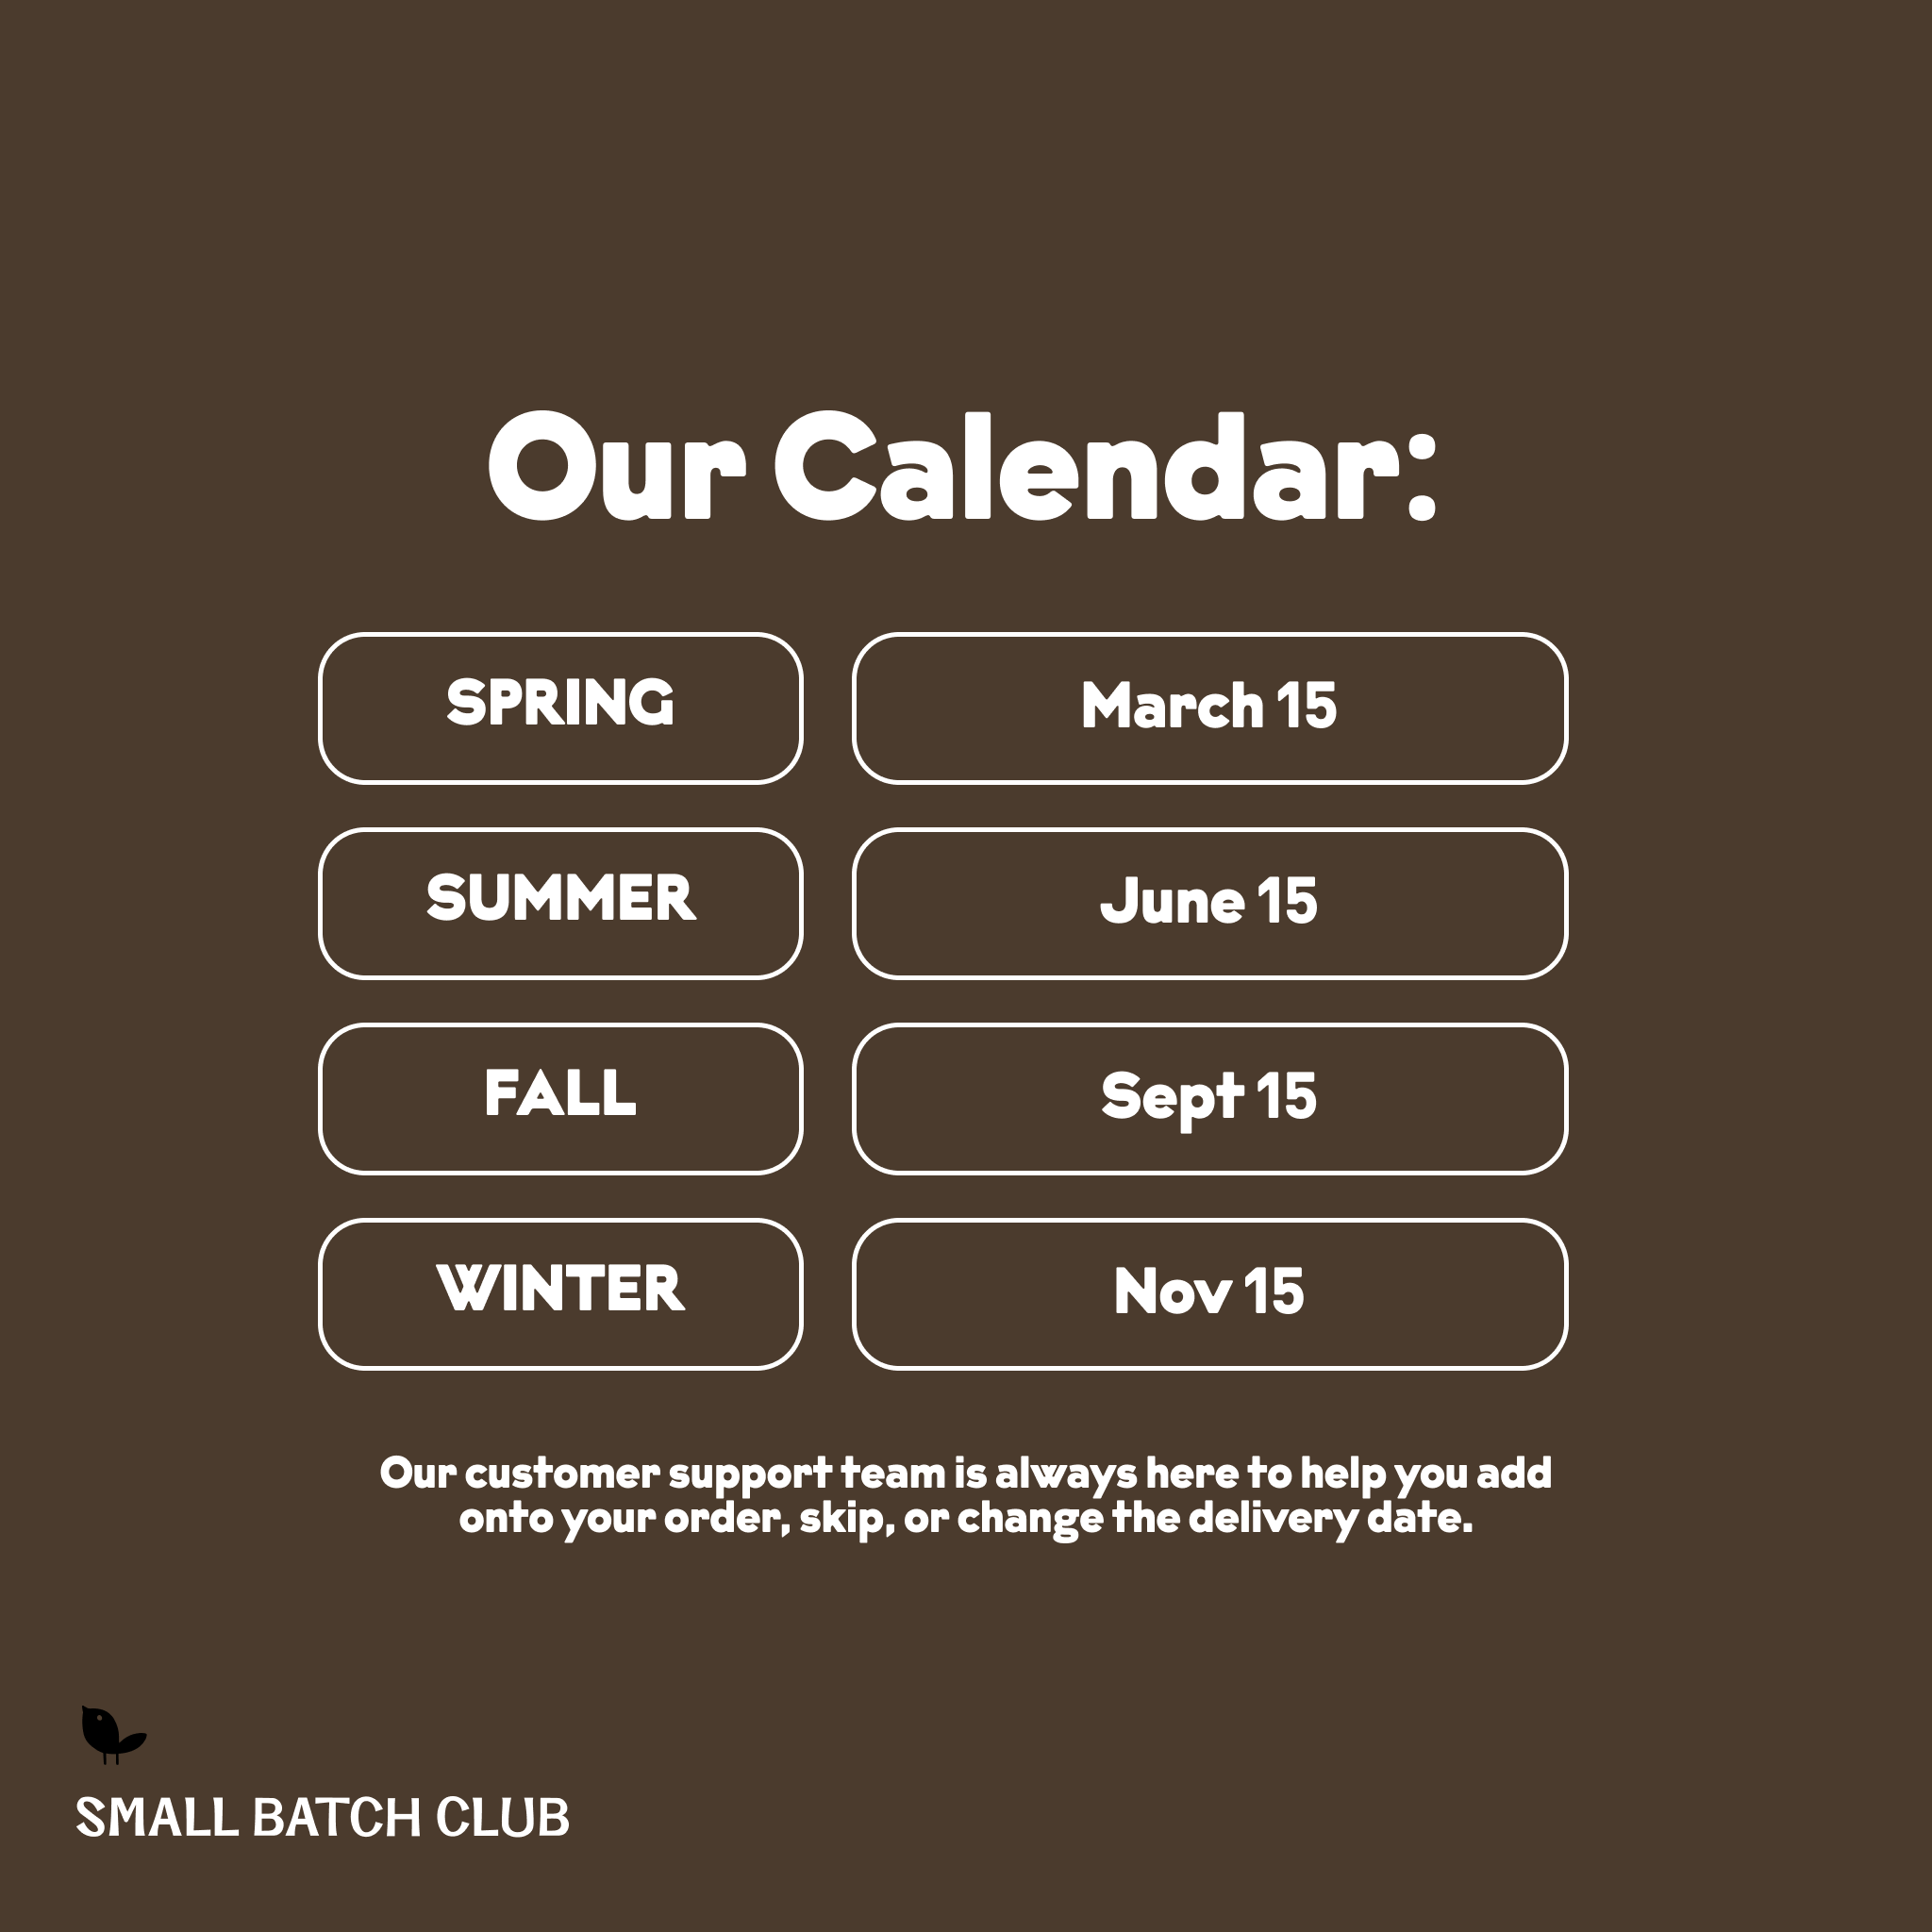 Our Small Batch Club Calendar